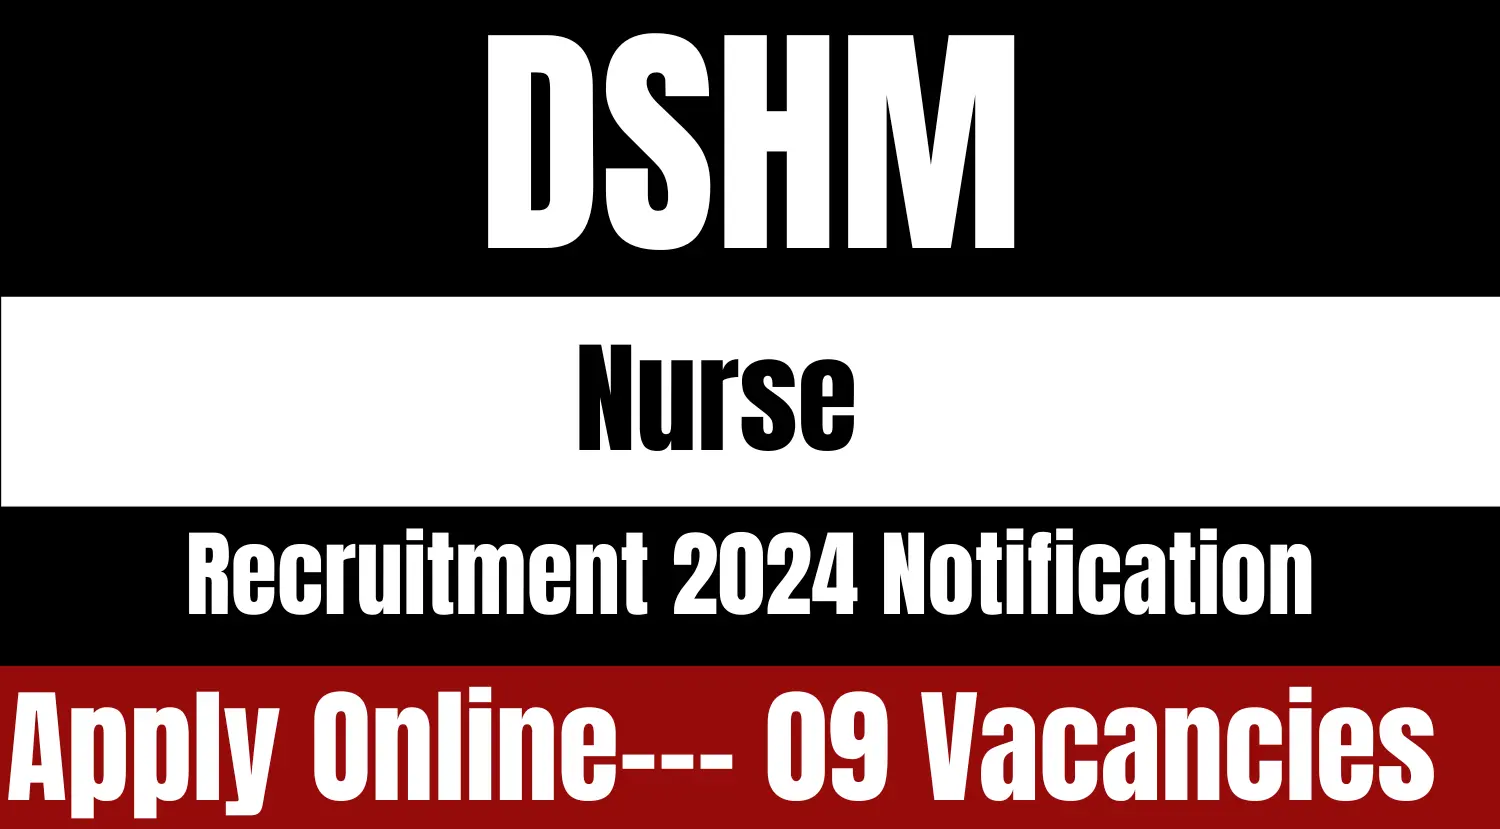 DSHM Nurse Recruitment 2024